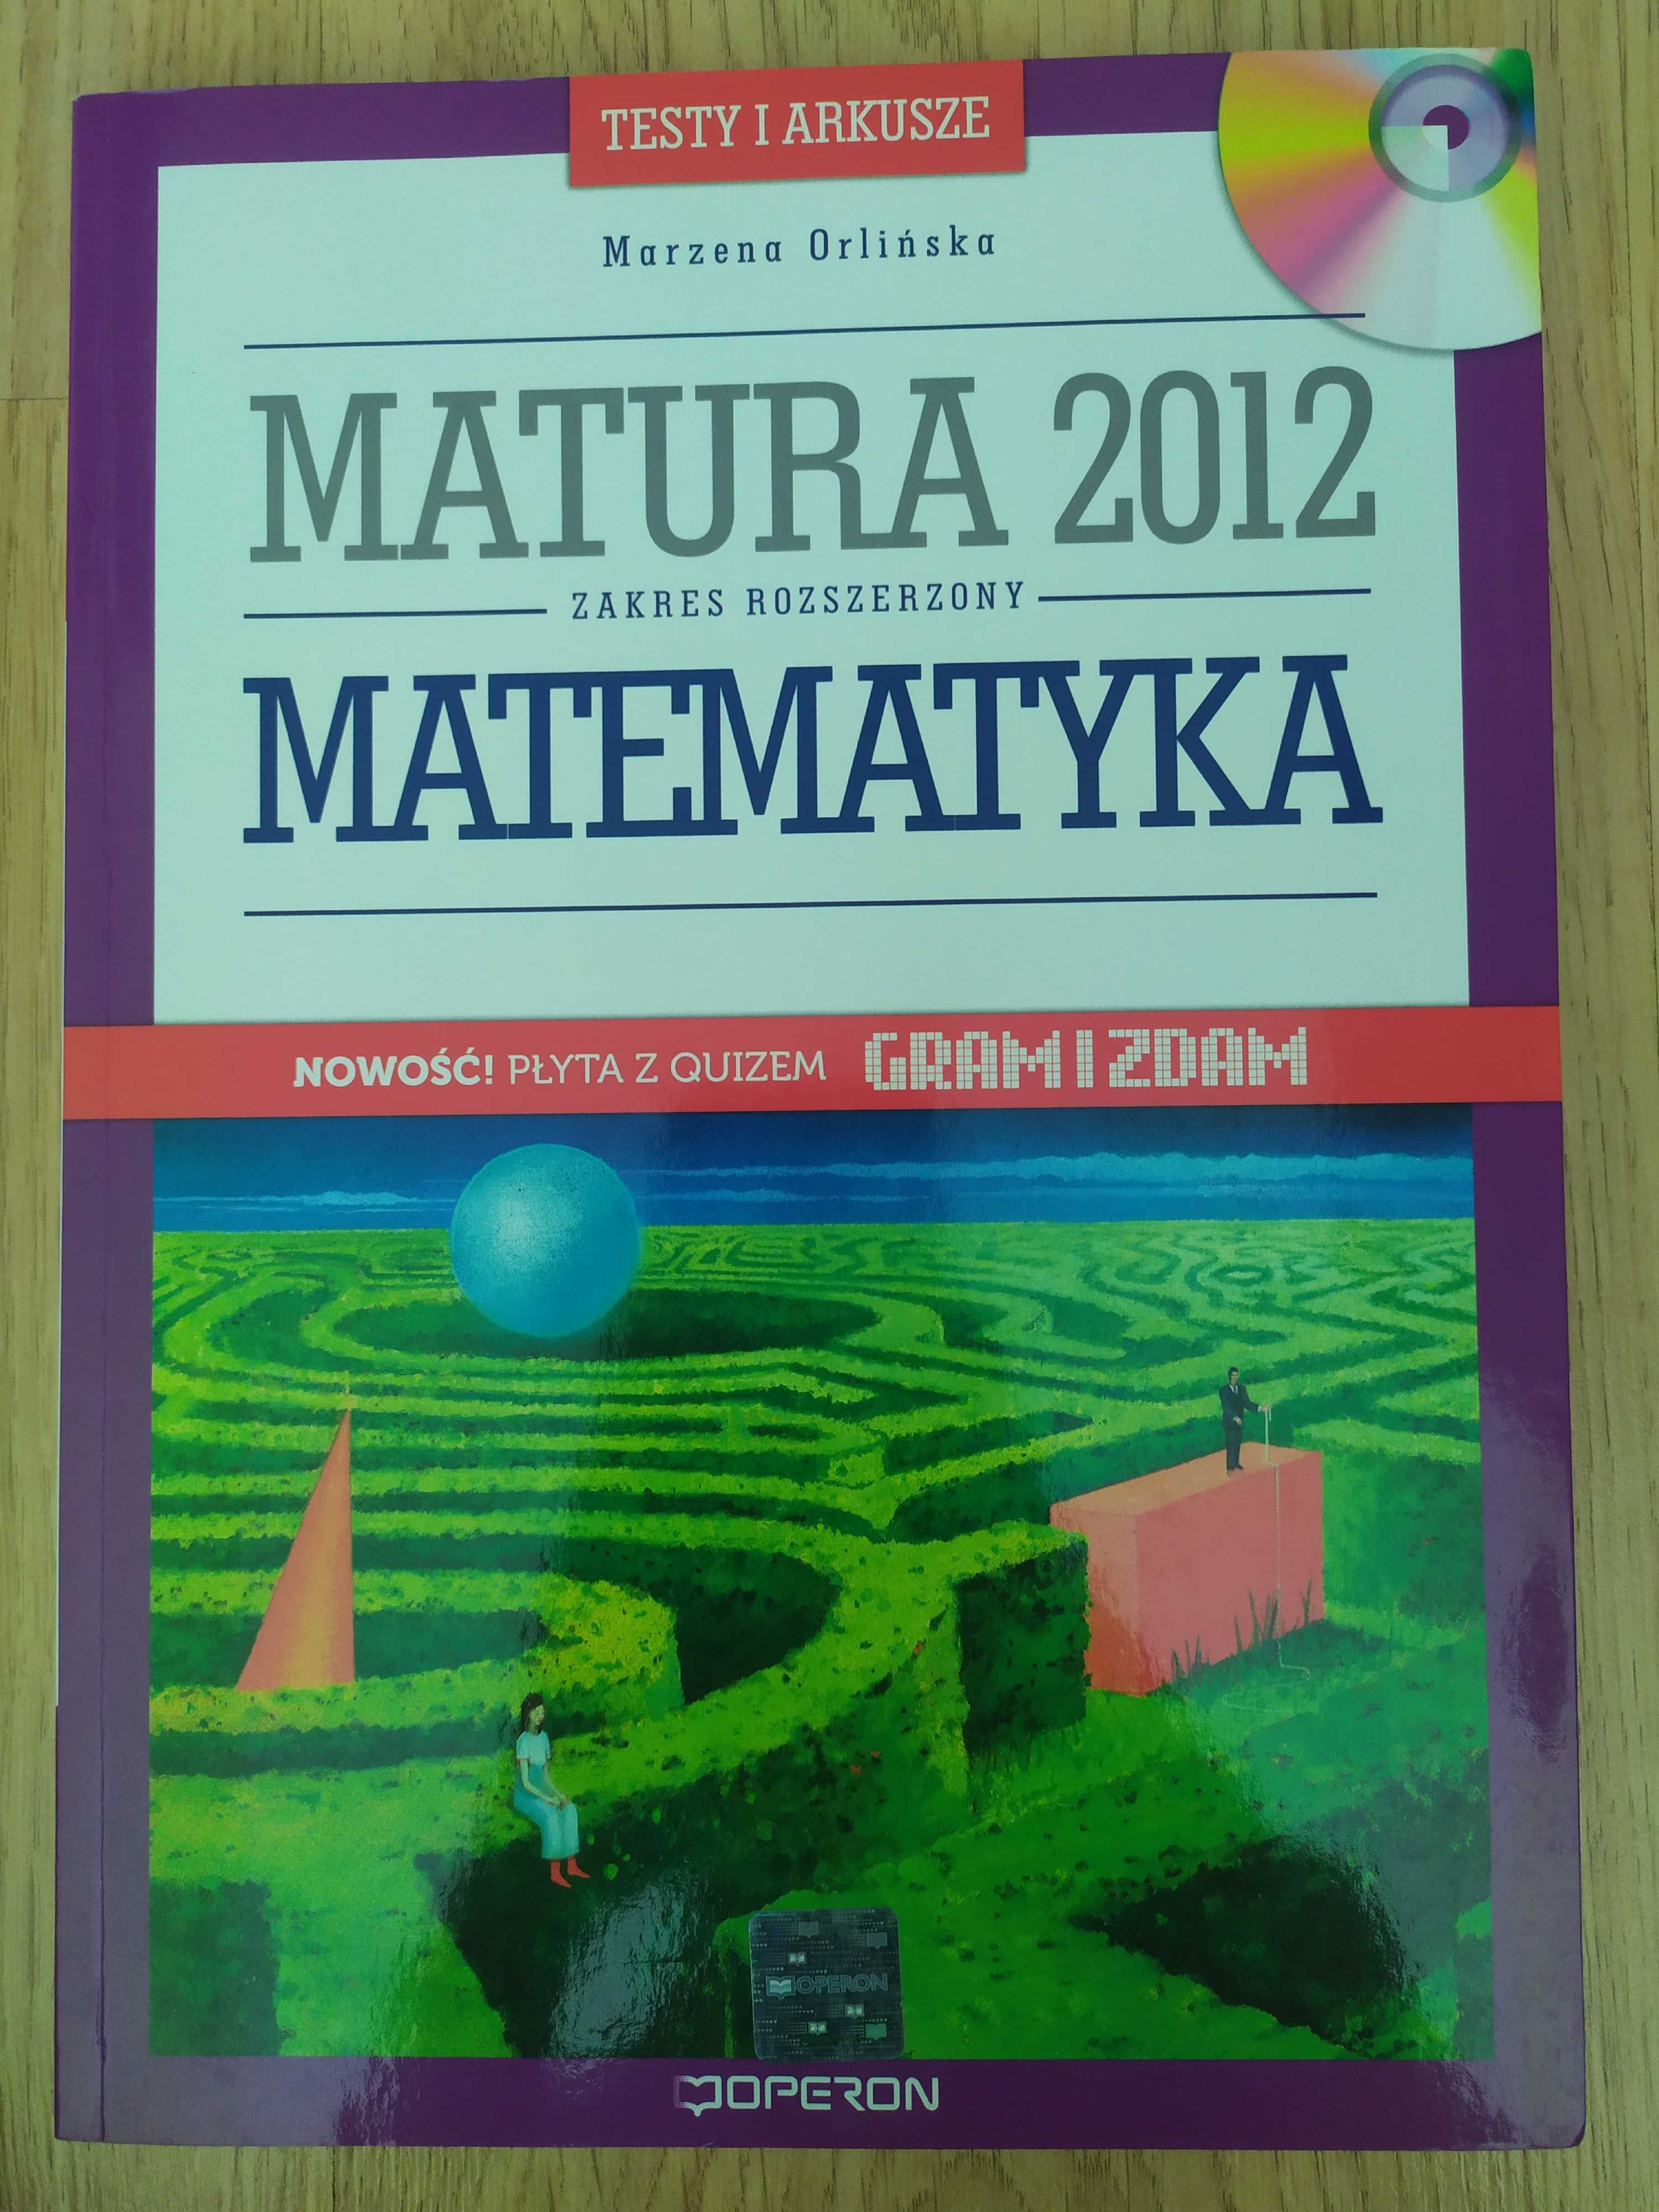 Matura 2012 matematyka rozszerzony operon testy i arkusze